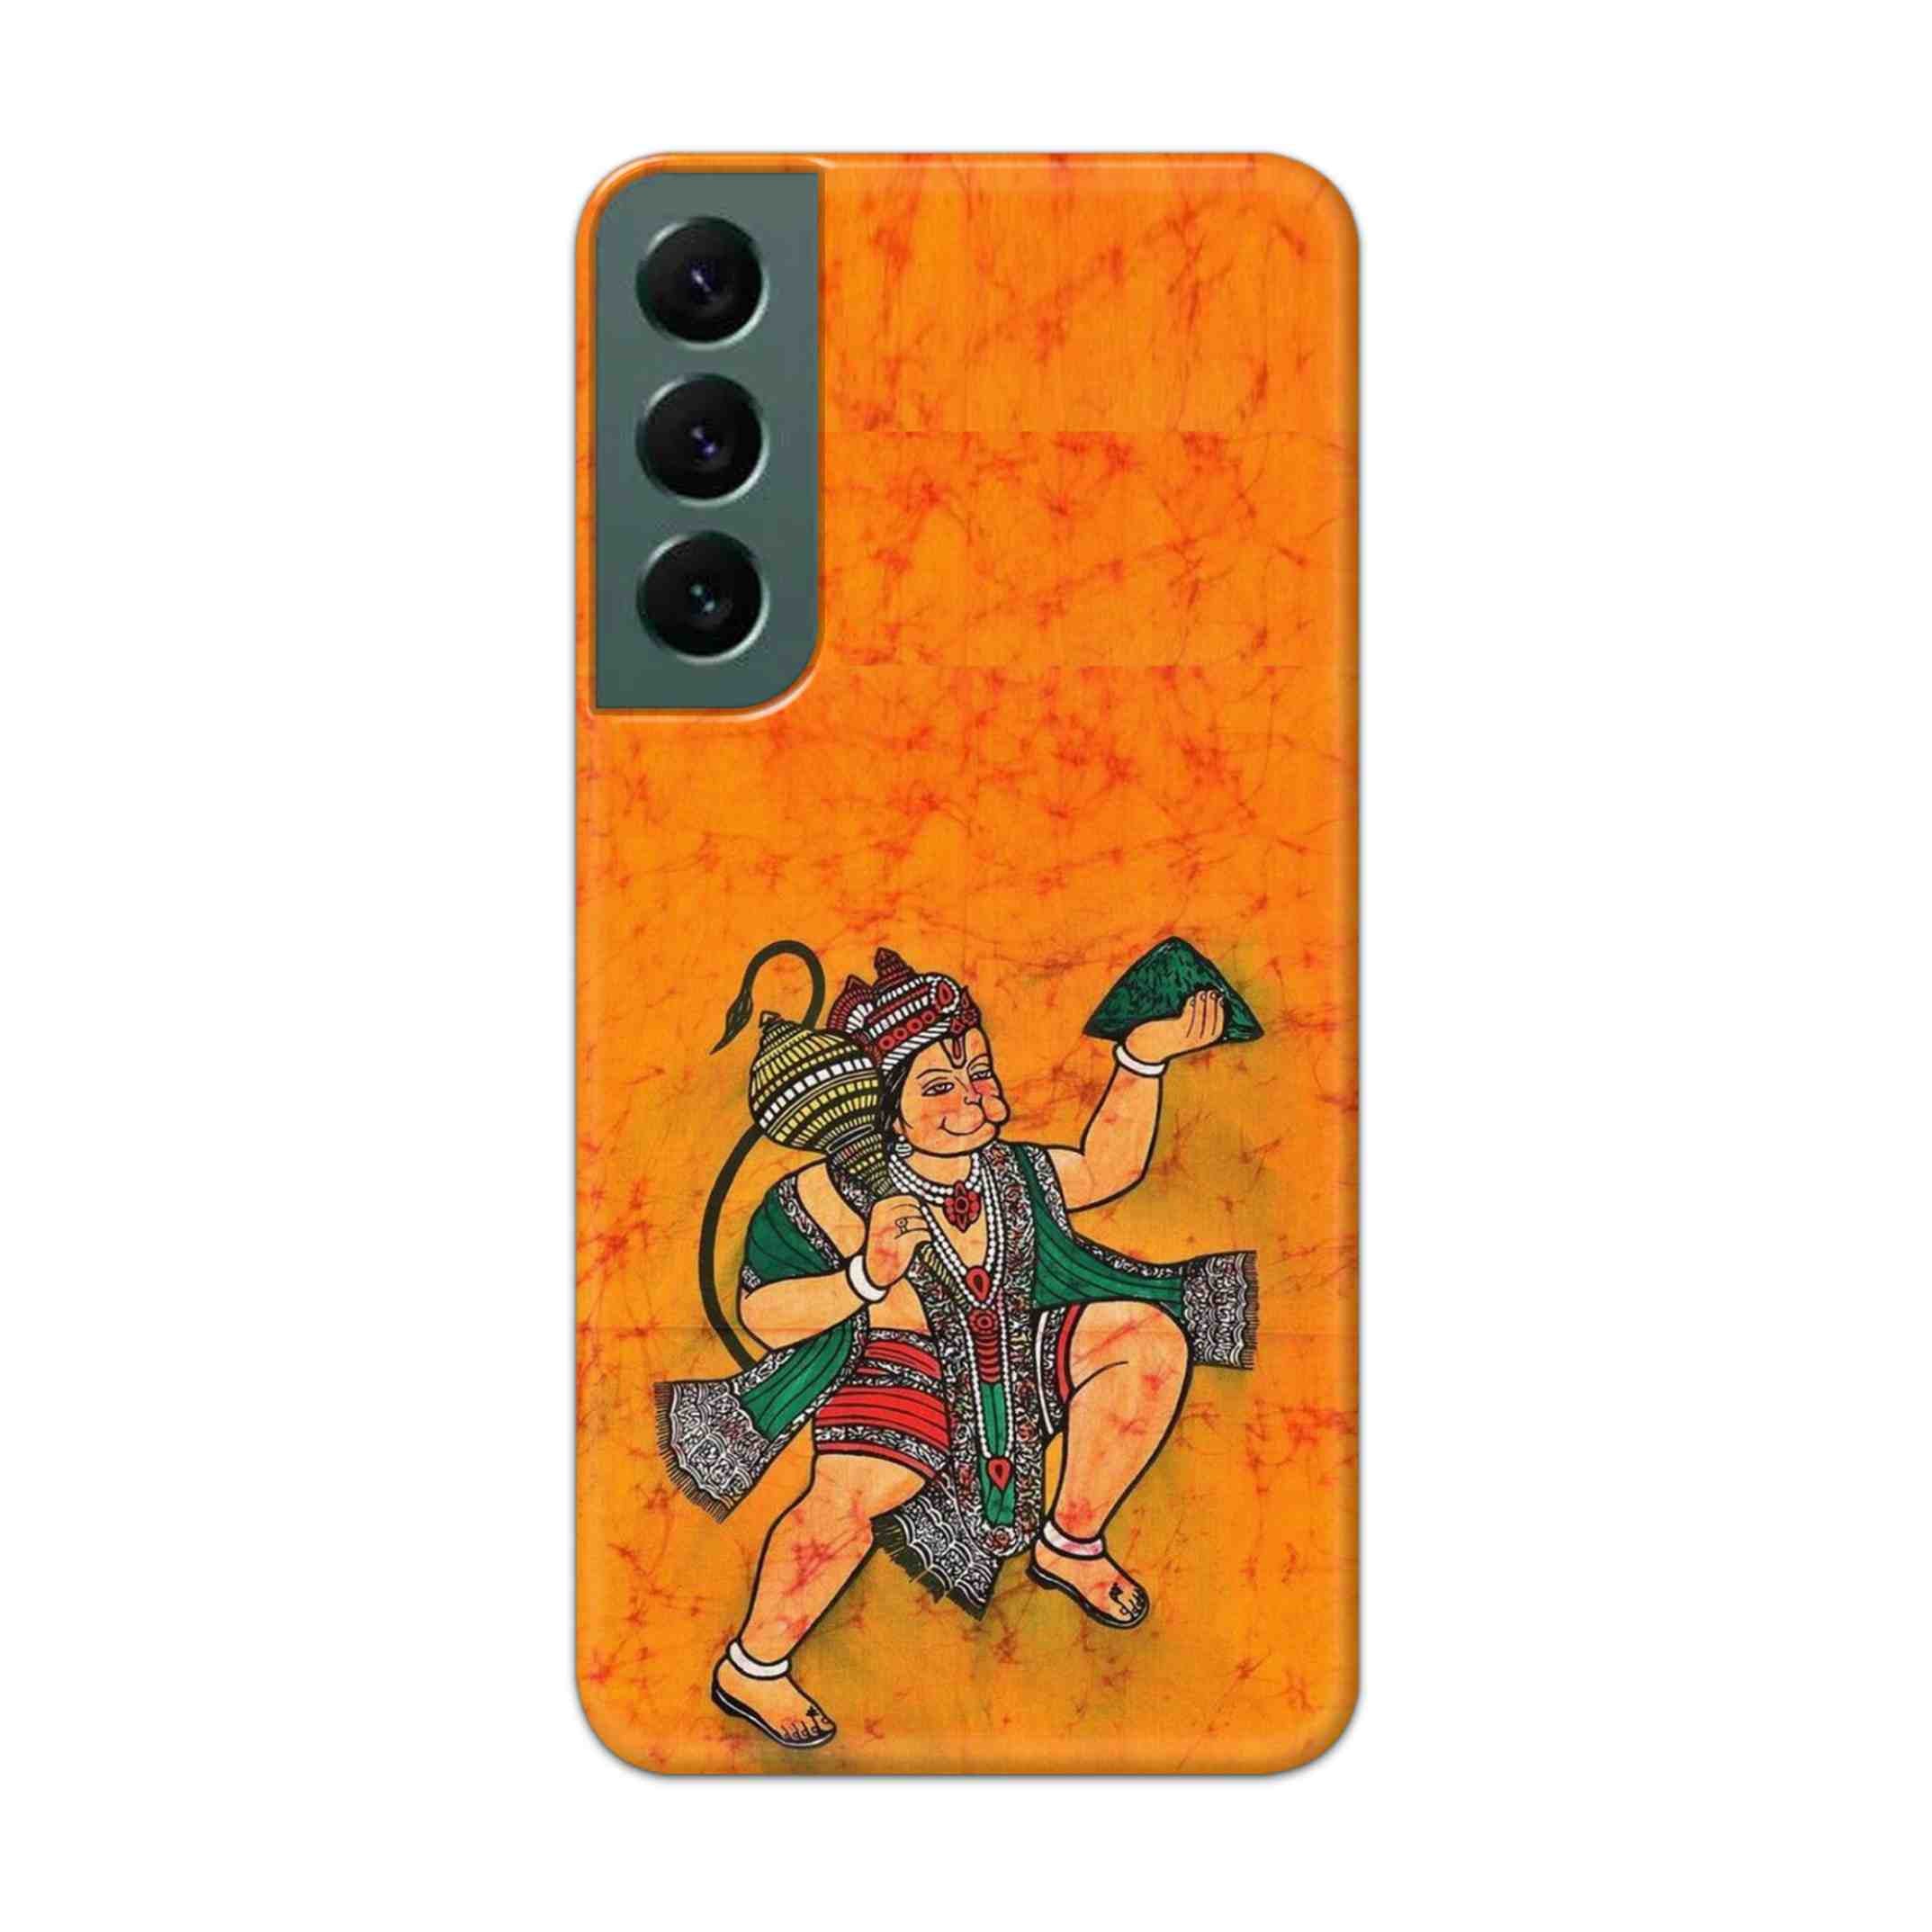 Buy Hanuman Ji Hard Back Mobile Phone Case Cover For Samsung S22 Online